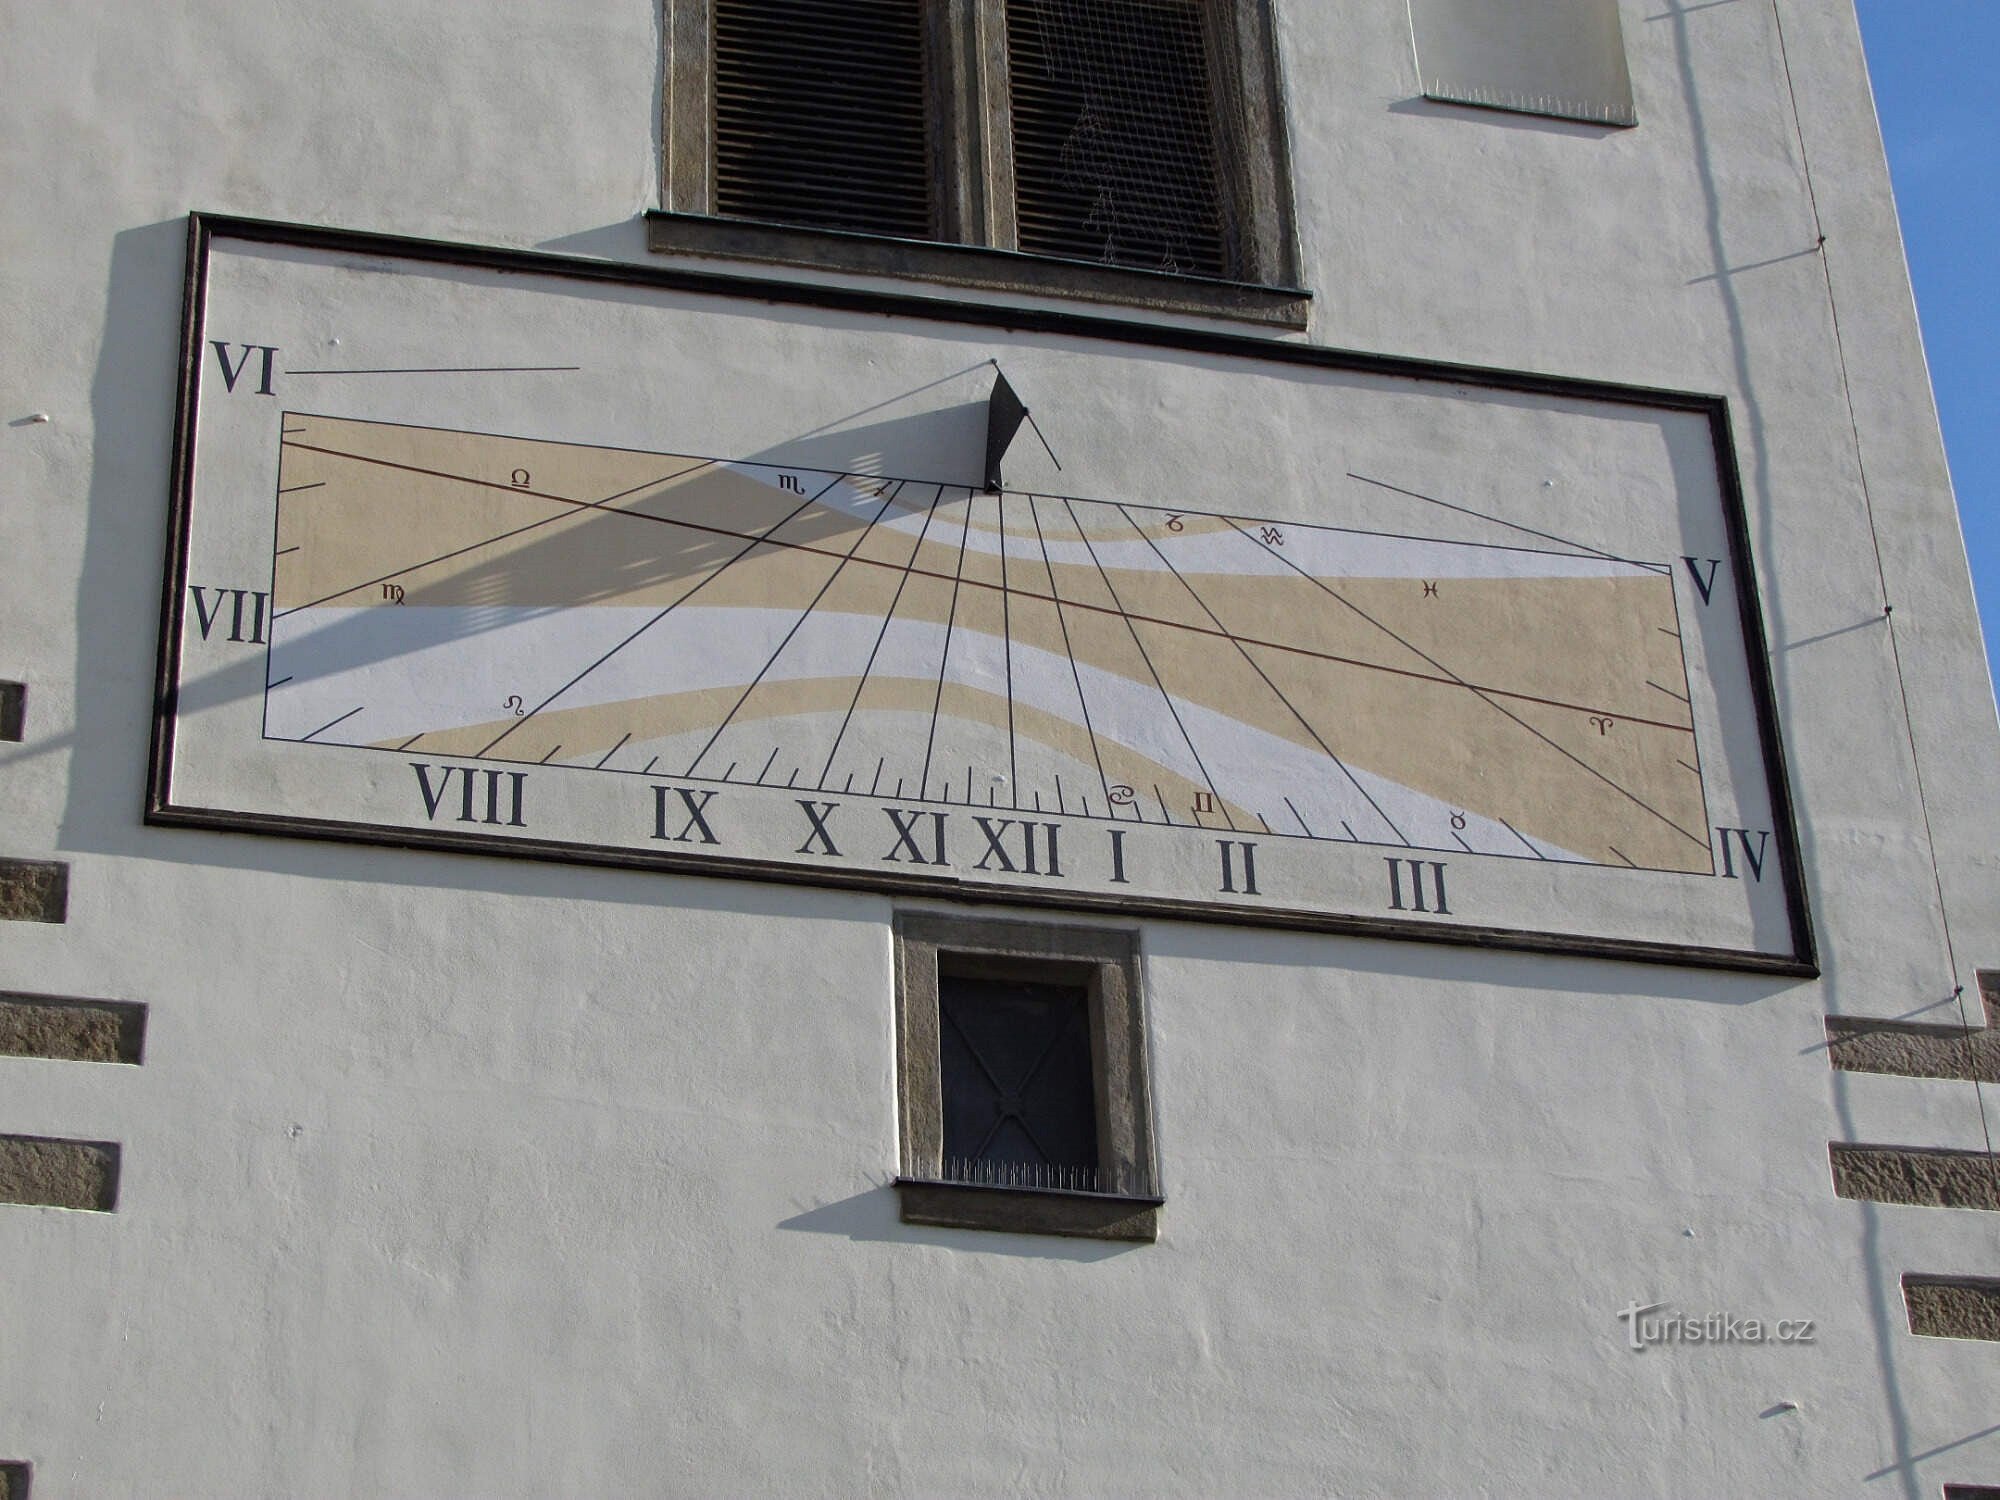 Lipník nad Bečvou - cadran solar istoric